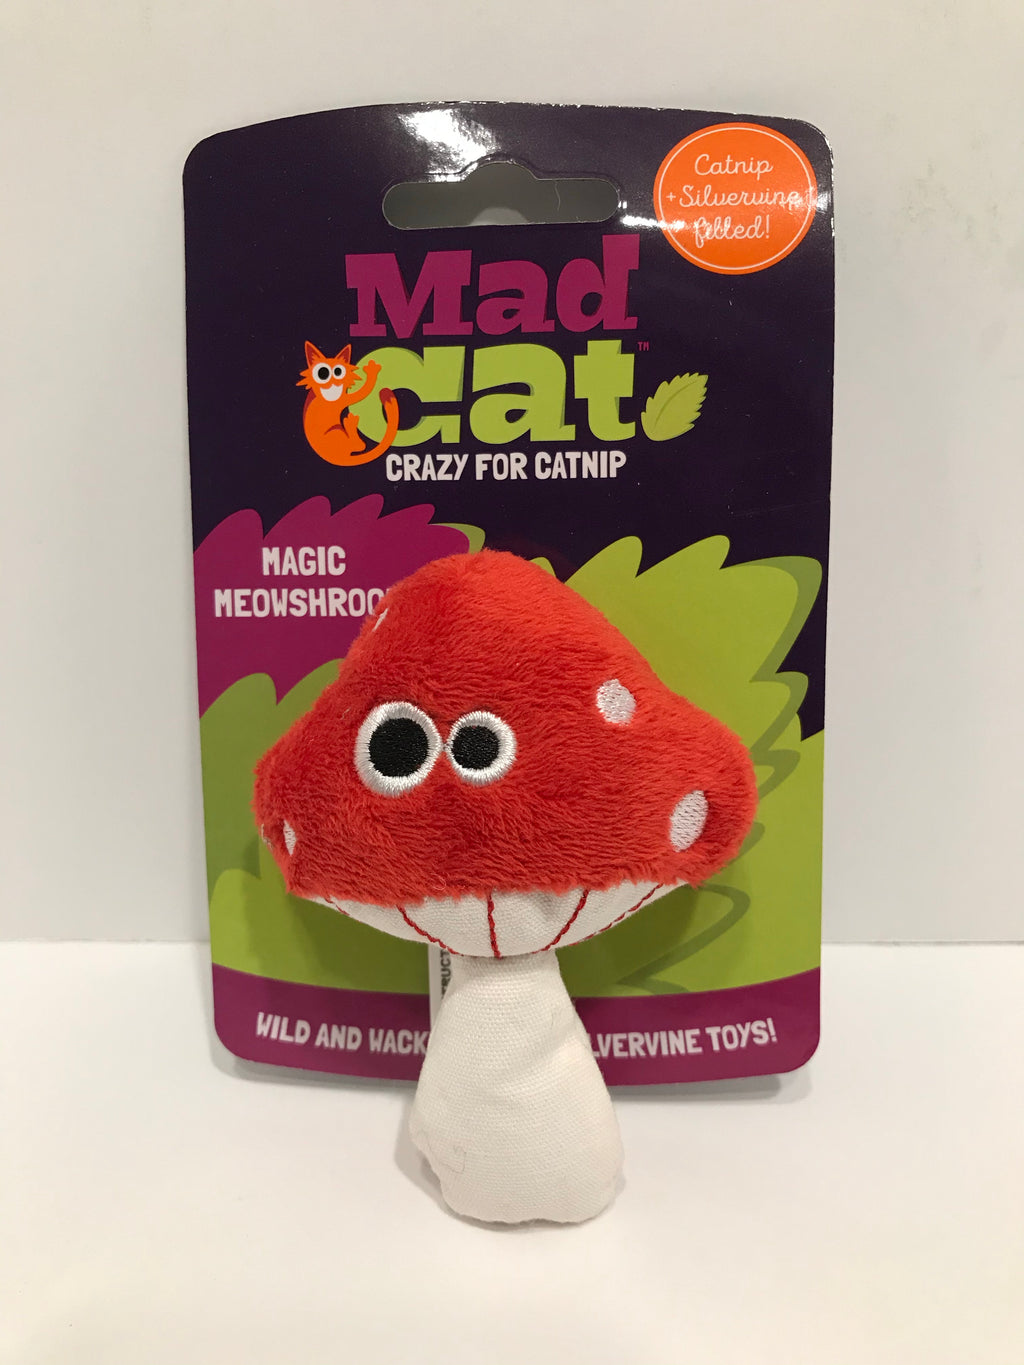 Mad Cat Magic Meowshroom Catnip Toy